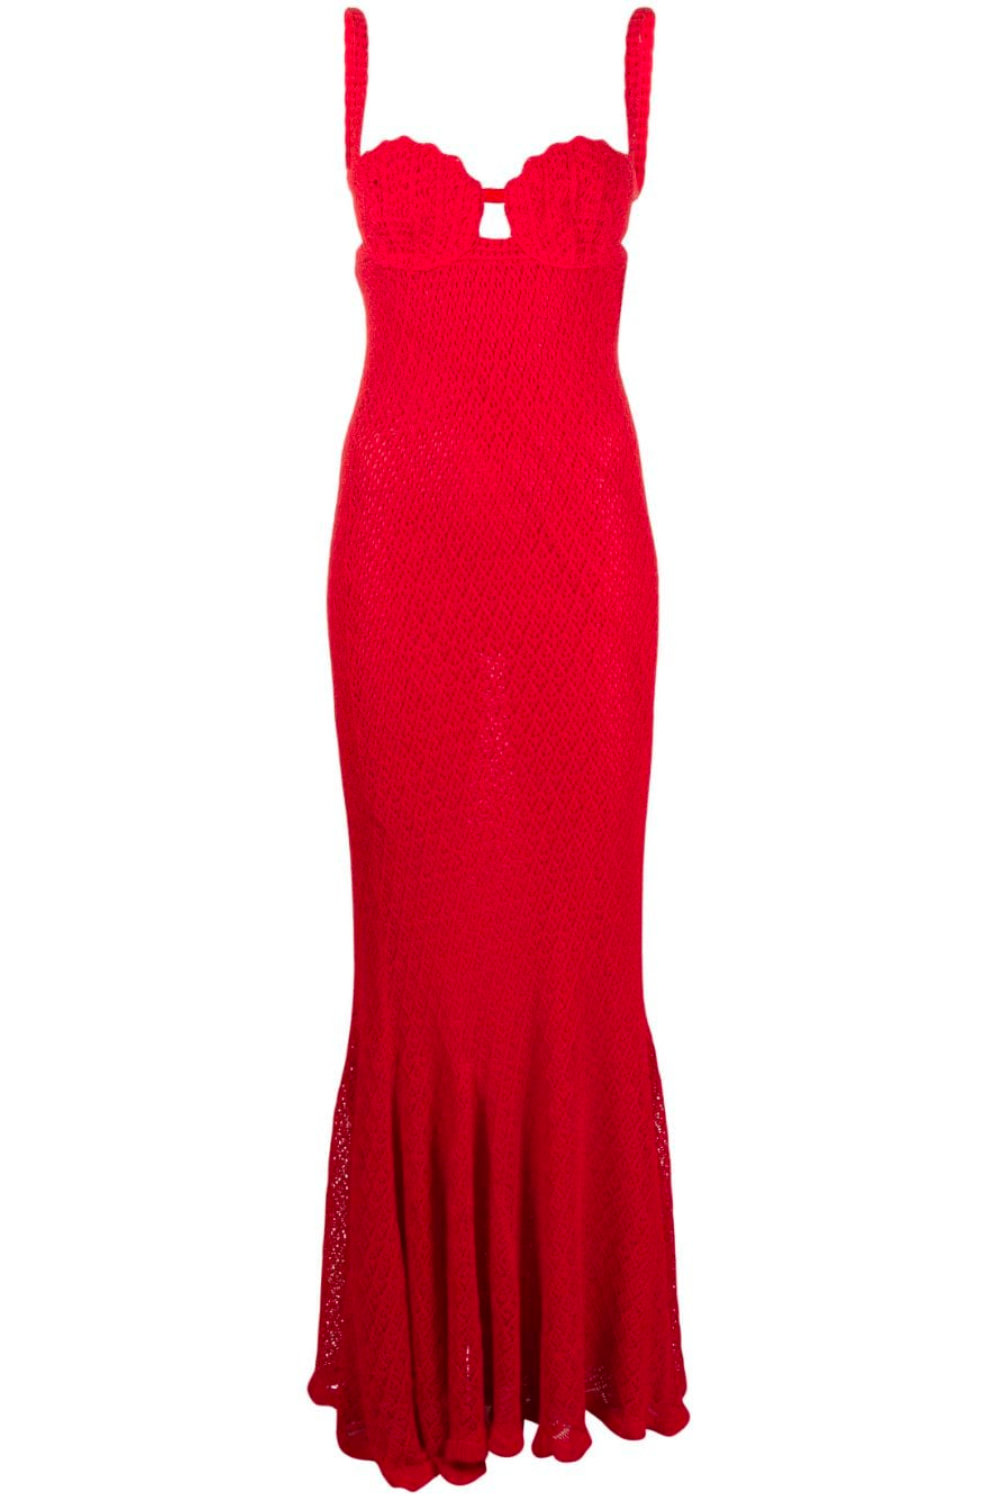 Blumarine-Red-Dress